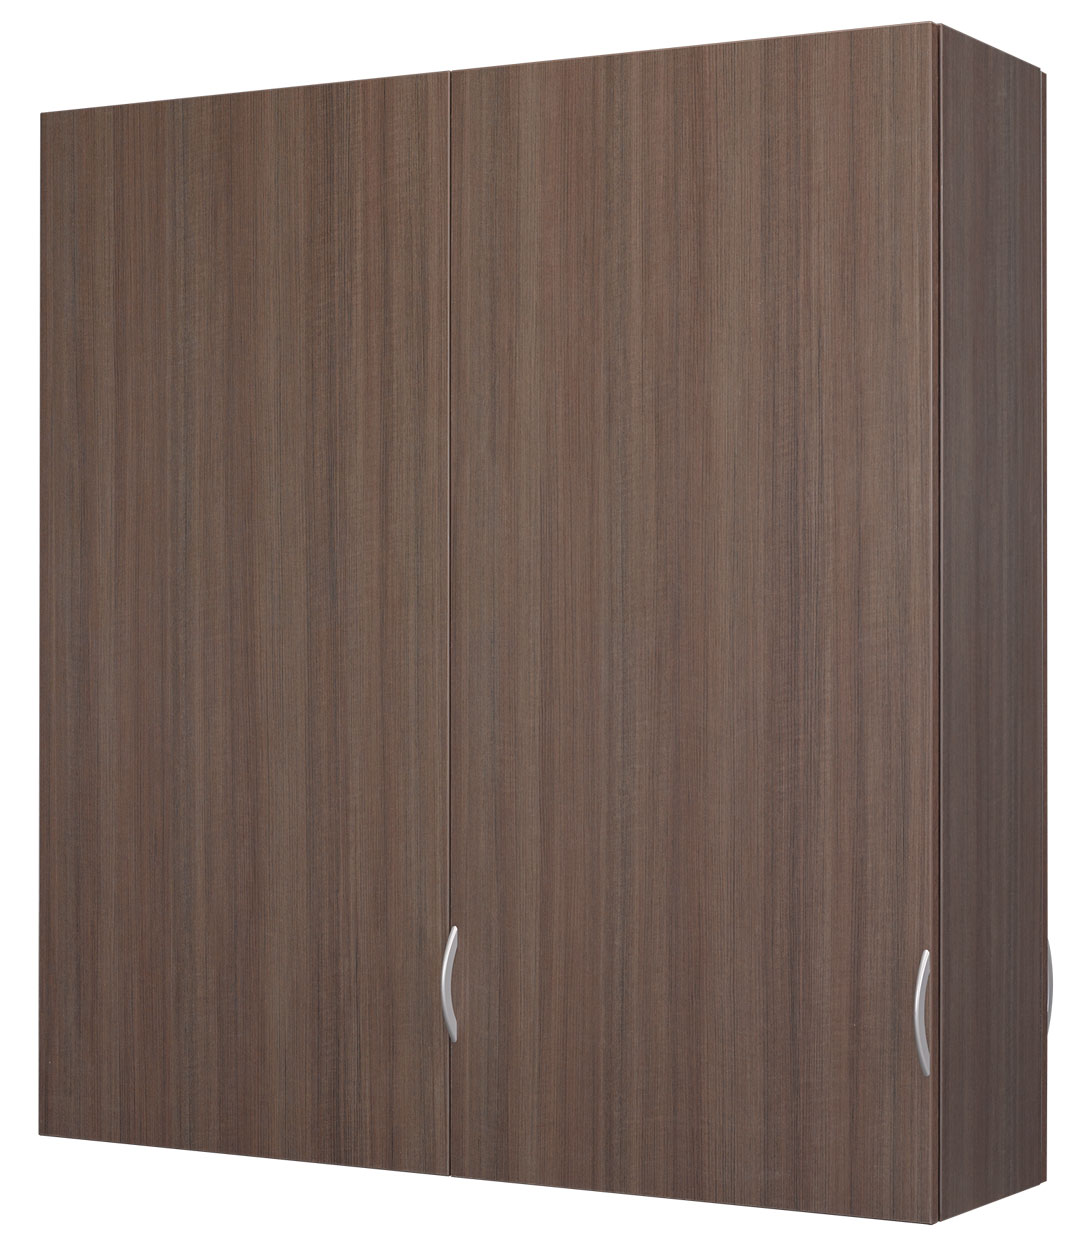 A-dec Inspire 595 wall-mounted cabinets in Studio Teak